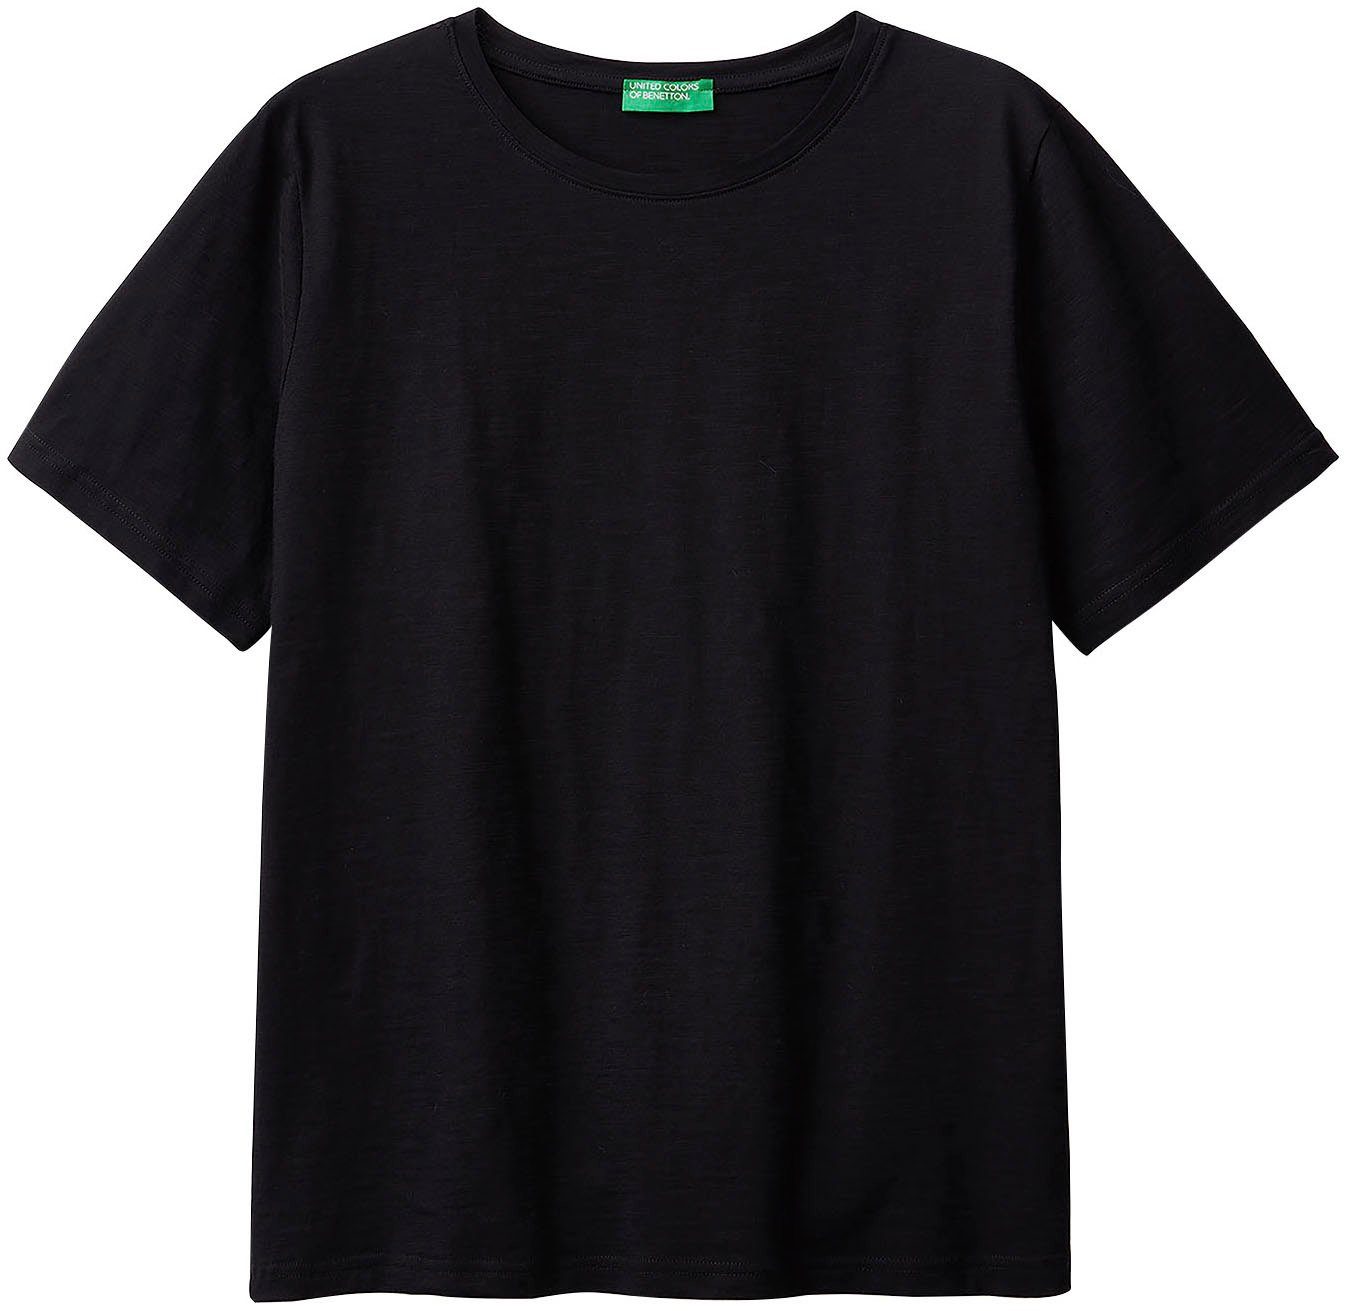 United Basic-Optik in cleaner Benetton schwarz T-Shirt Colors of